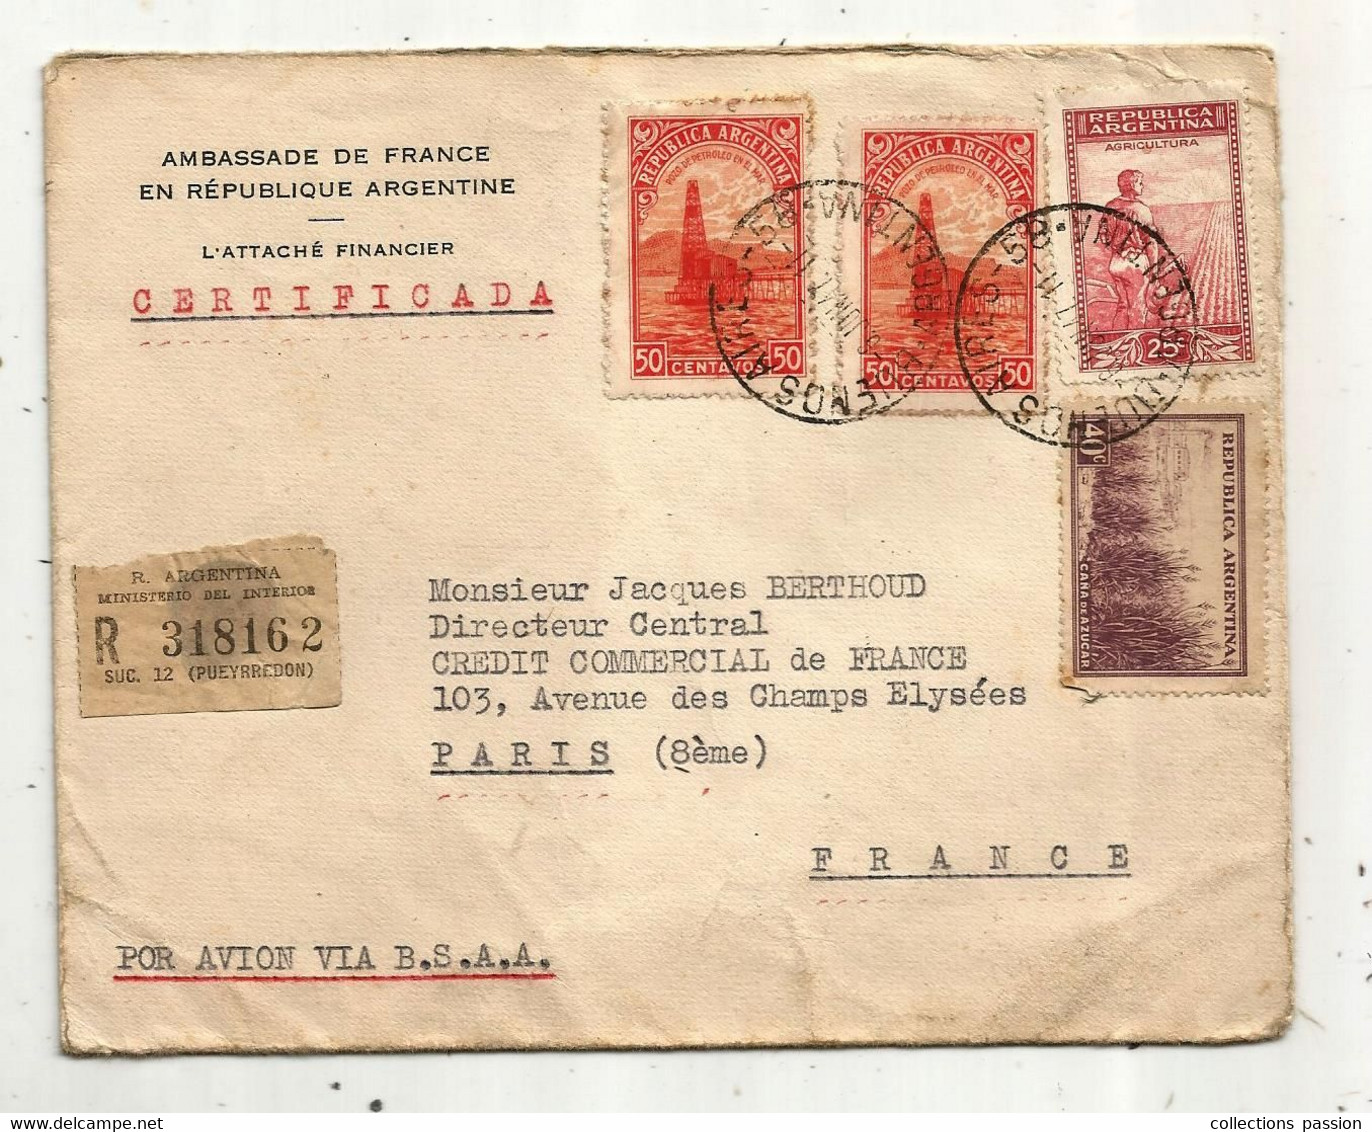 Lettre , Republica Argentina , BUENOS AIRES 58 ,1947, Ambassade De France ,CERTIFICADA ,R Suc. 12 (PUEYRREDON) - Lettres & Documents